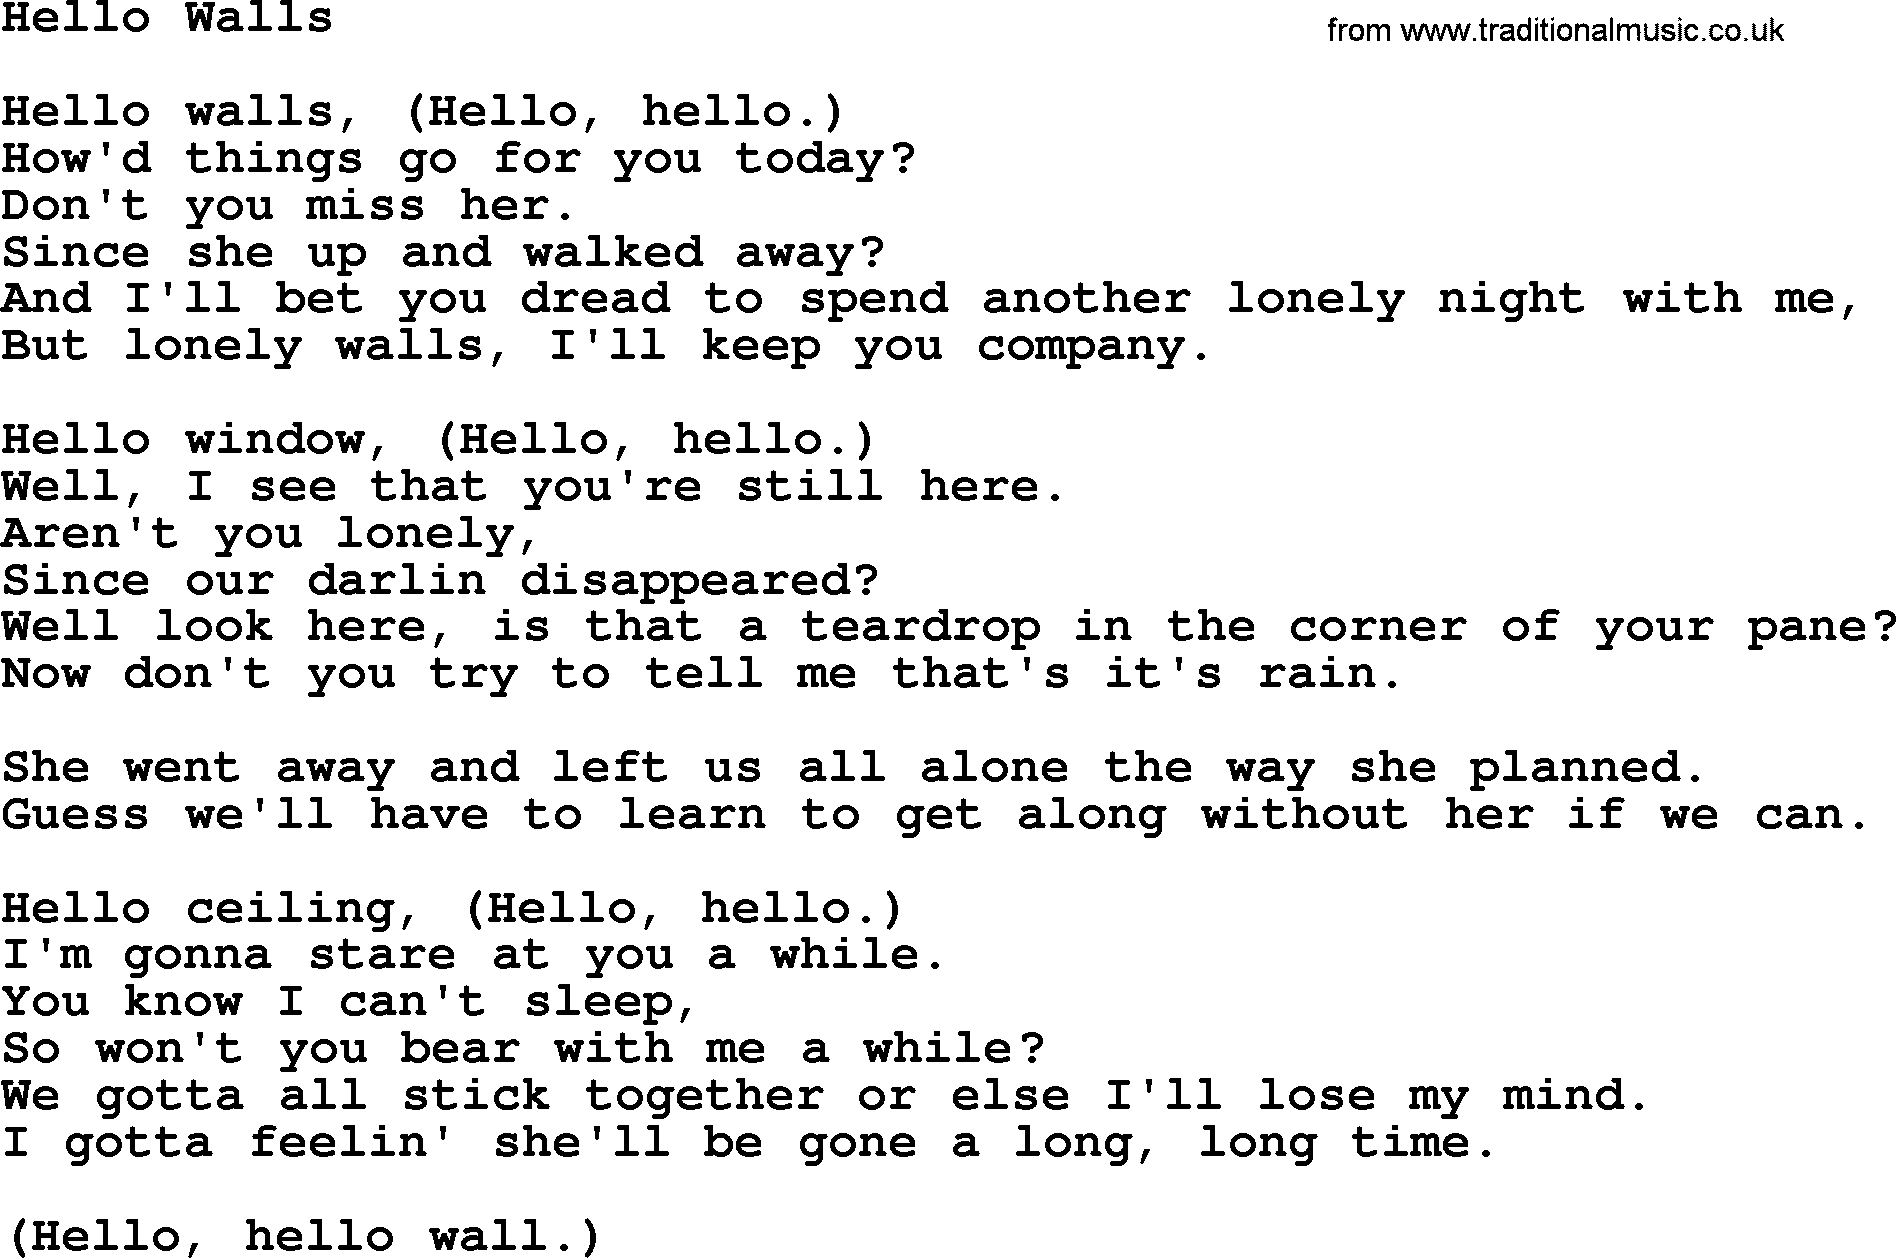 Willie Nelson song: Hello Walls lyrics